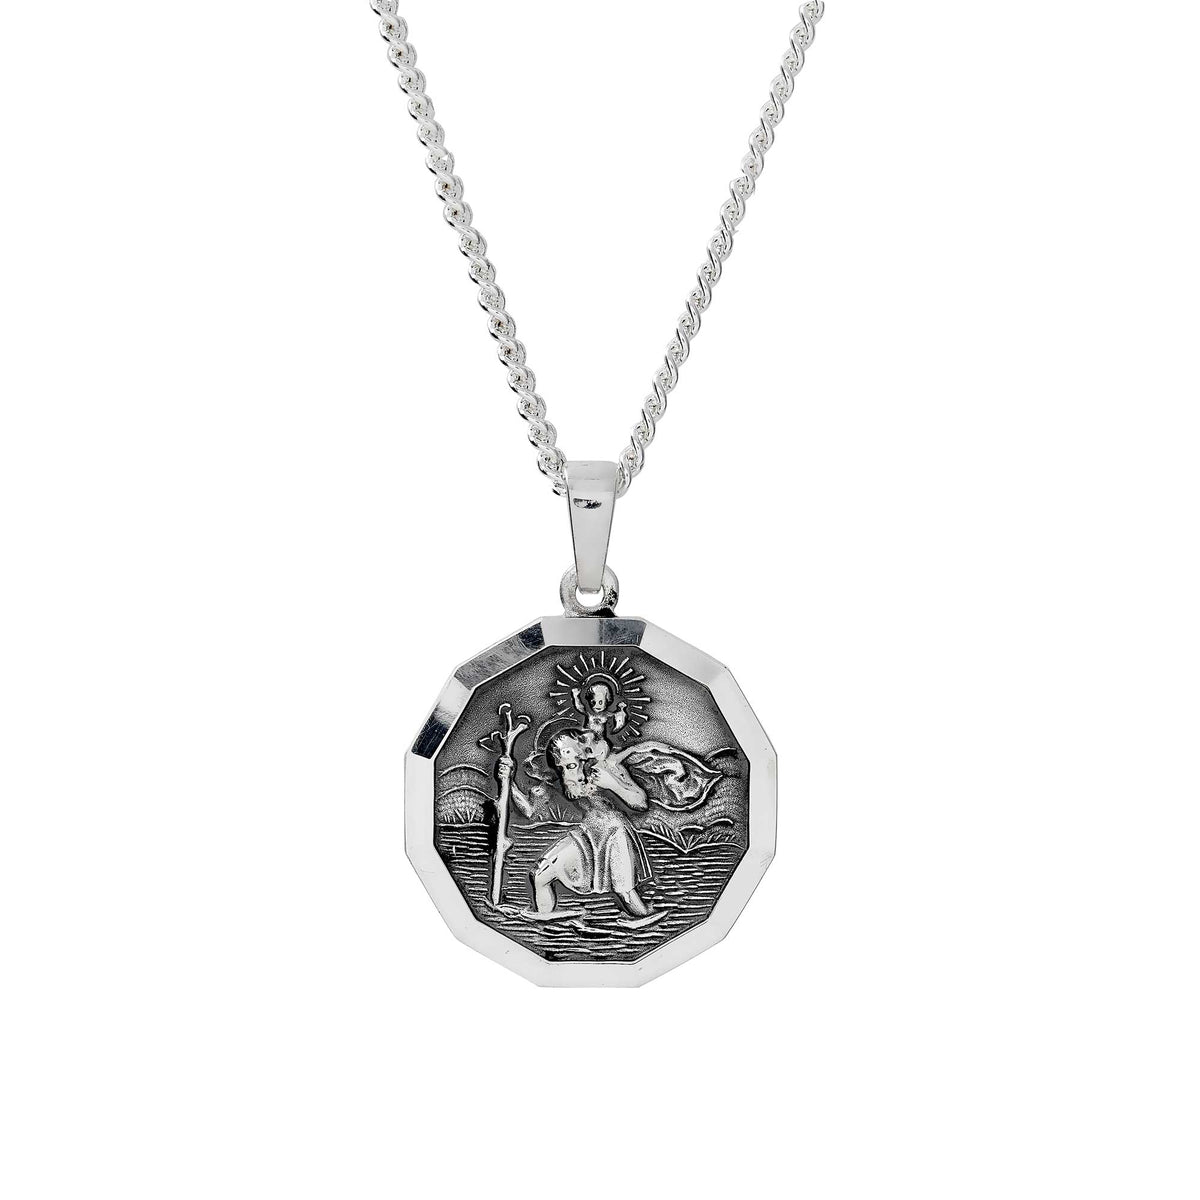 small dodecagon 12 sided st christopher pendant for men women travel gift for him